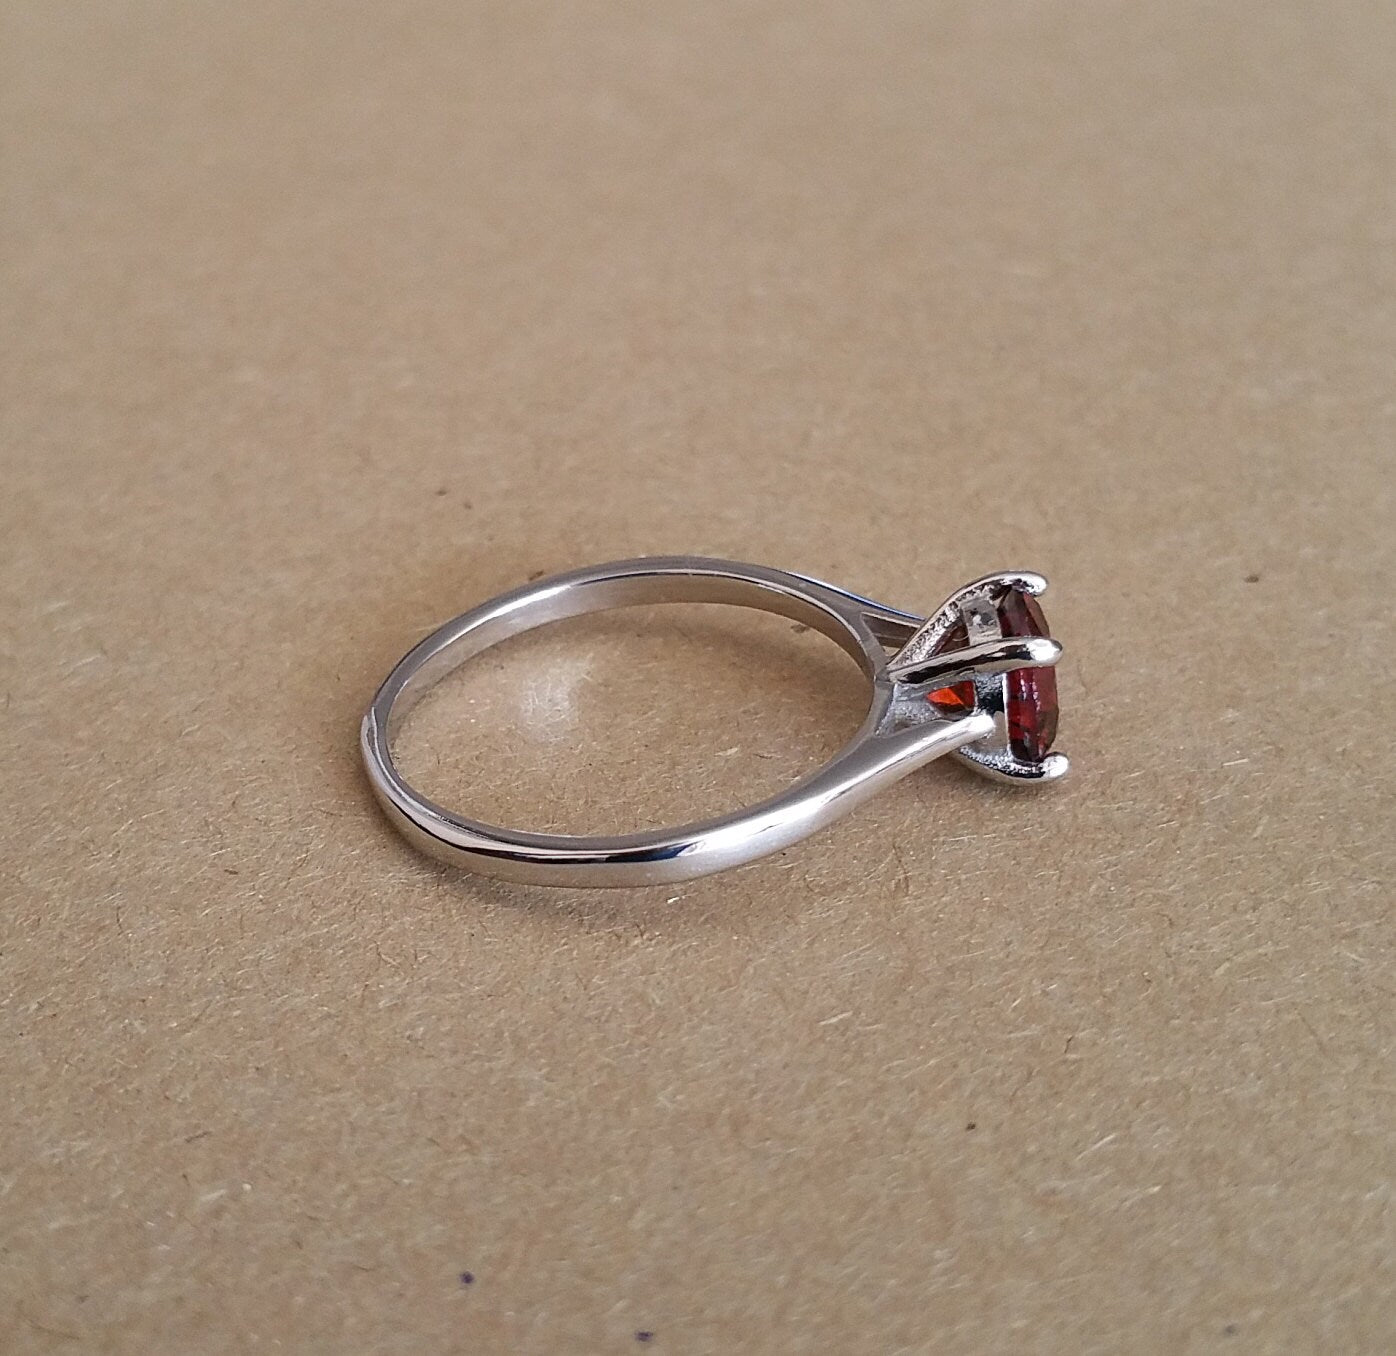 Genuine 1.5ct Garnet solitaire ring in Titanium or White Gold - engagement ring - wedding ring - handmade ring